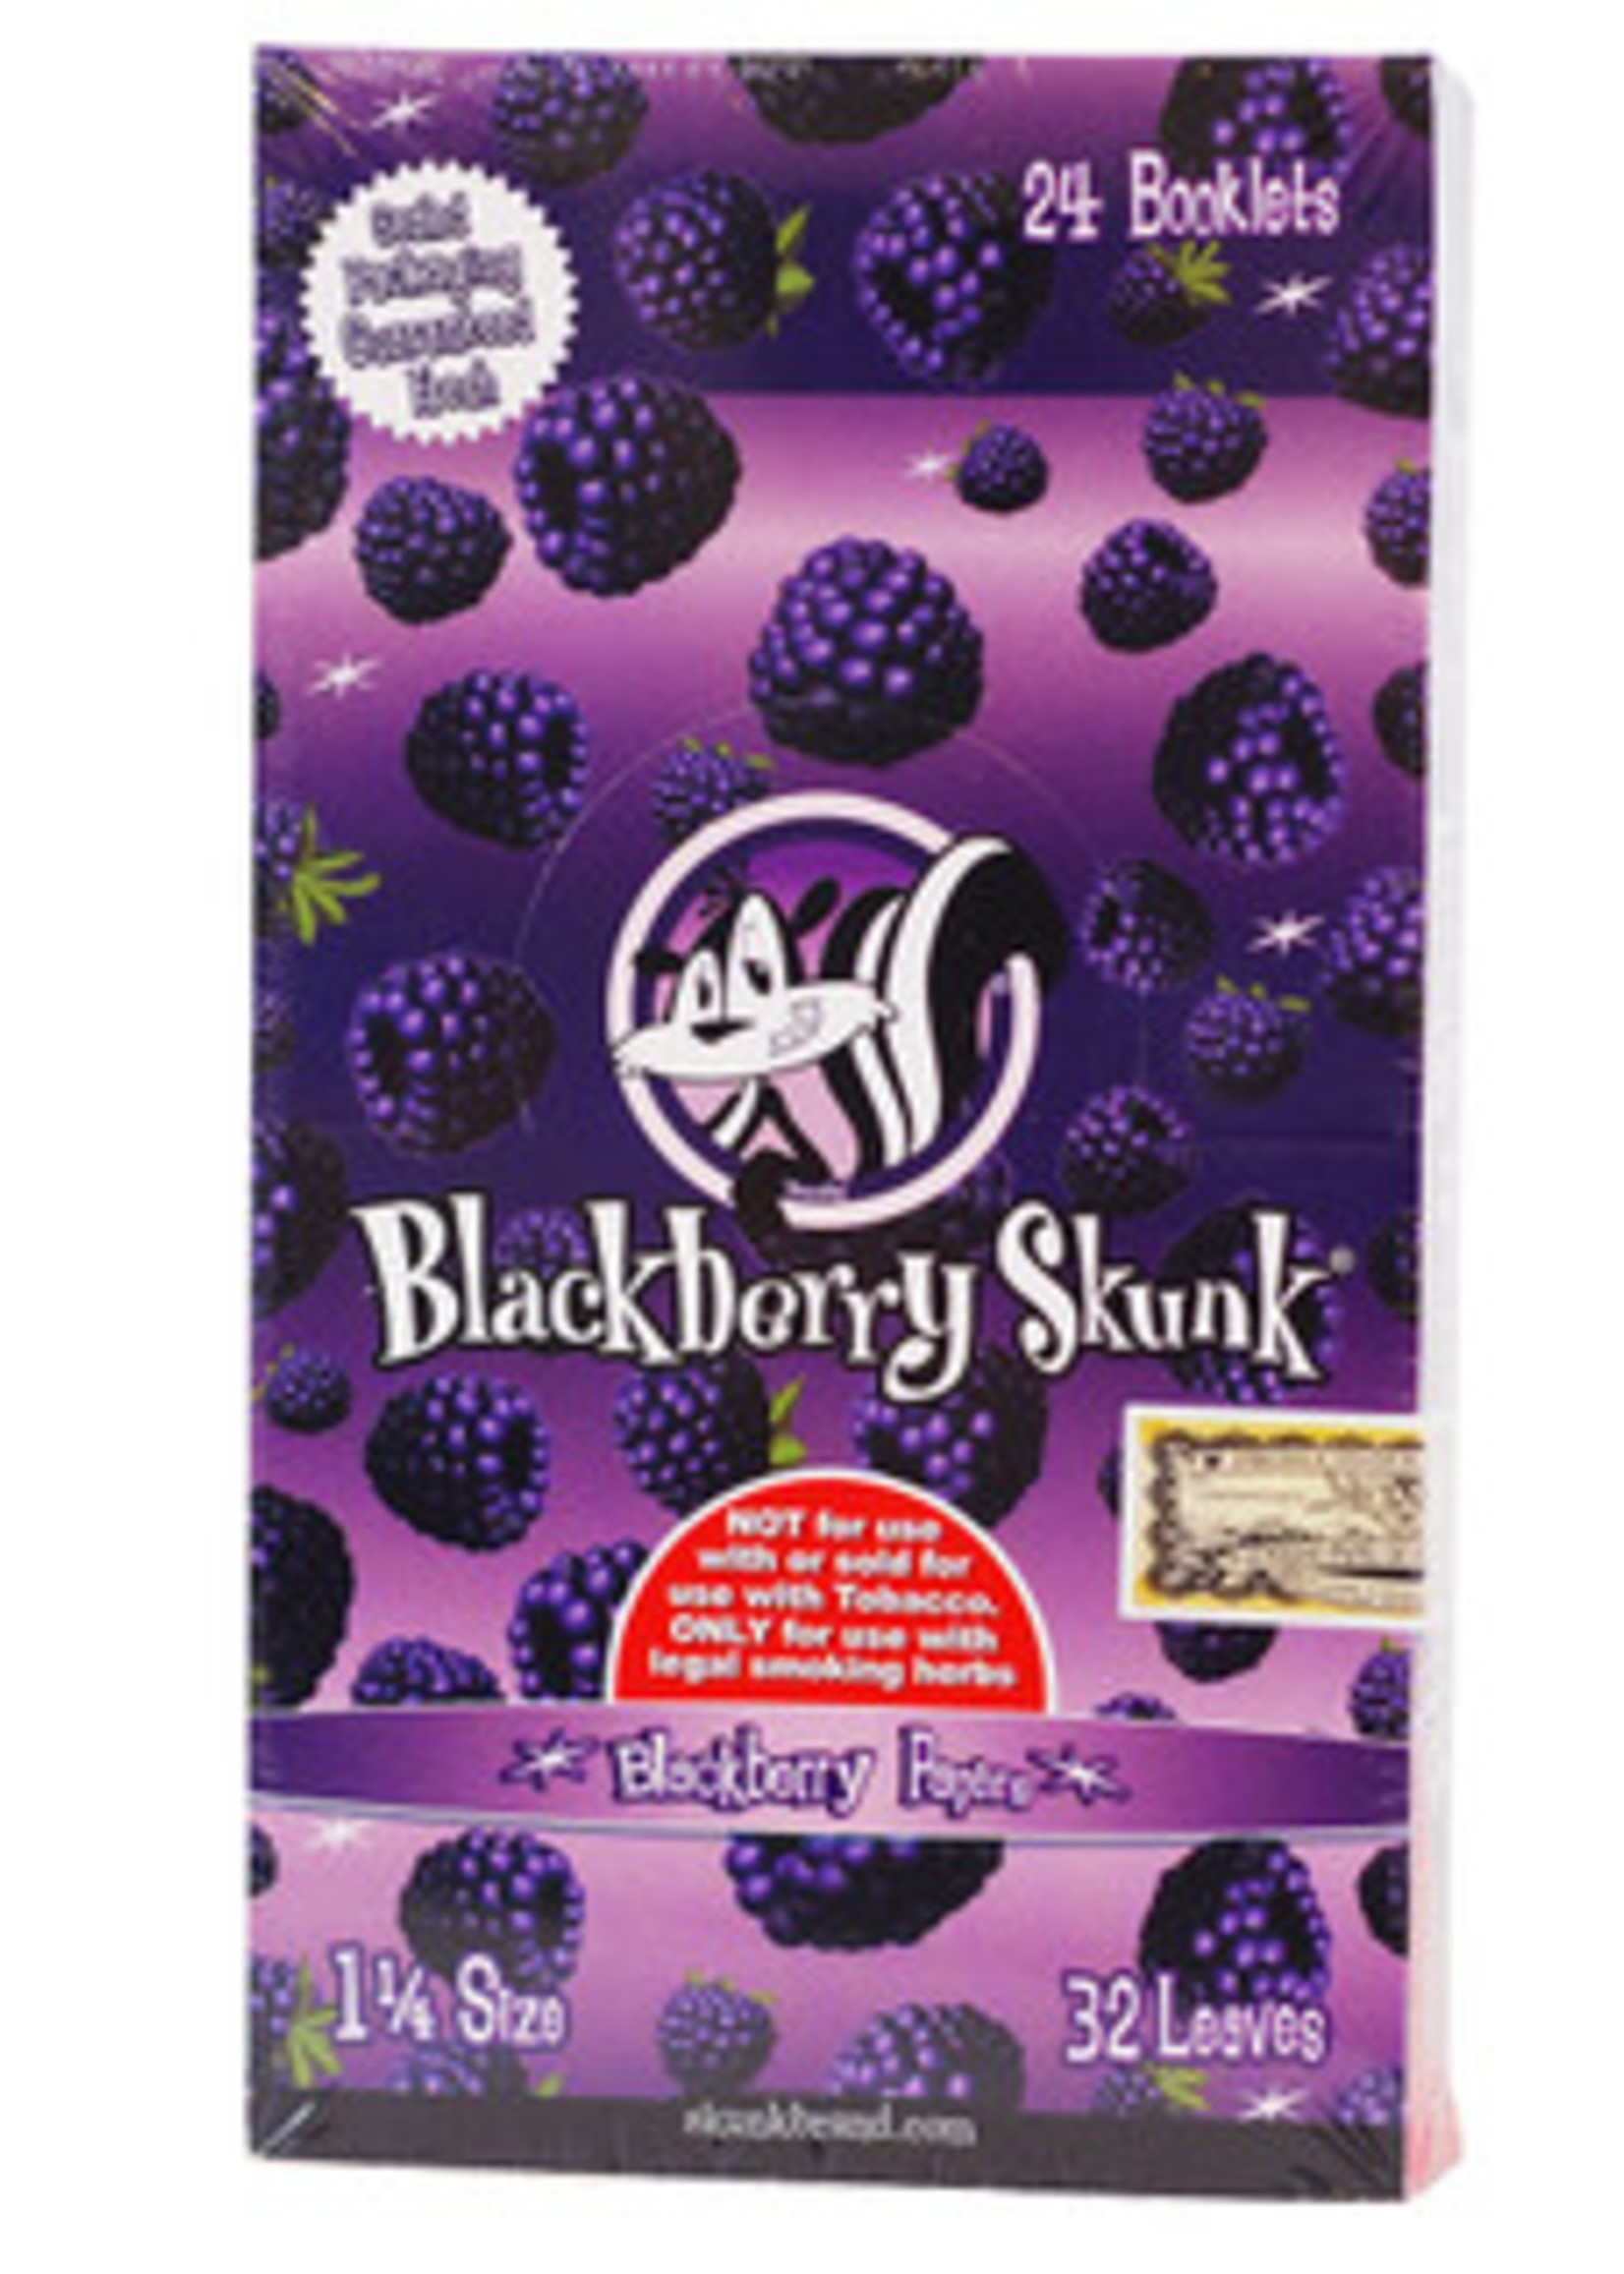 Skunk Brand Blackberry Skunk 1 1/4 Papers